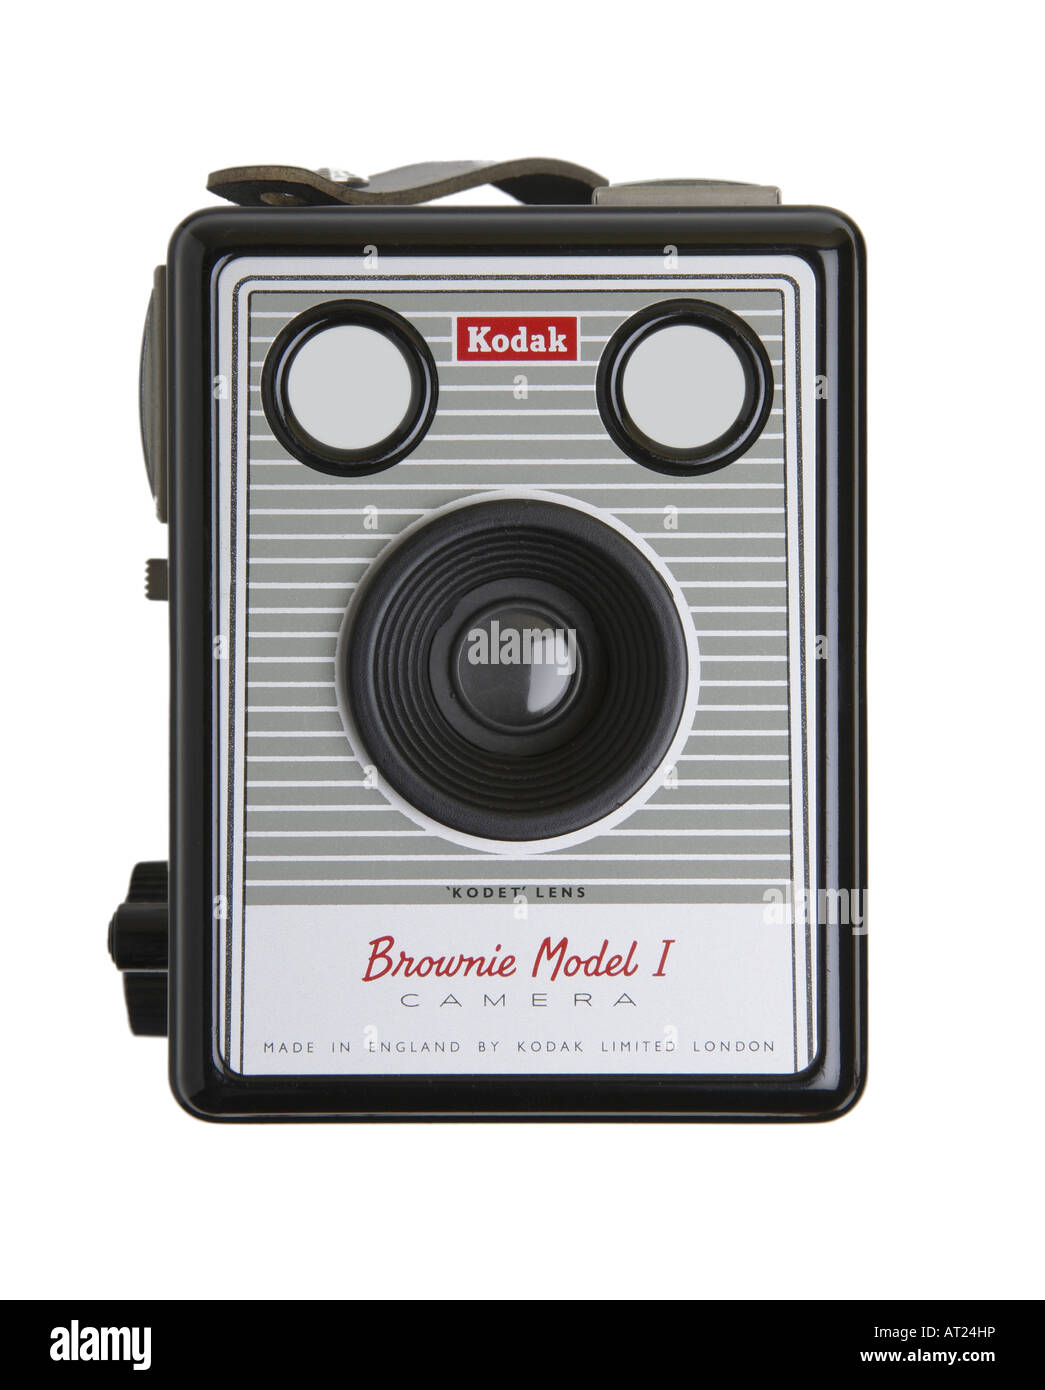 Kodak Brownie Model 1 camera, front view Stock Photo